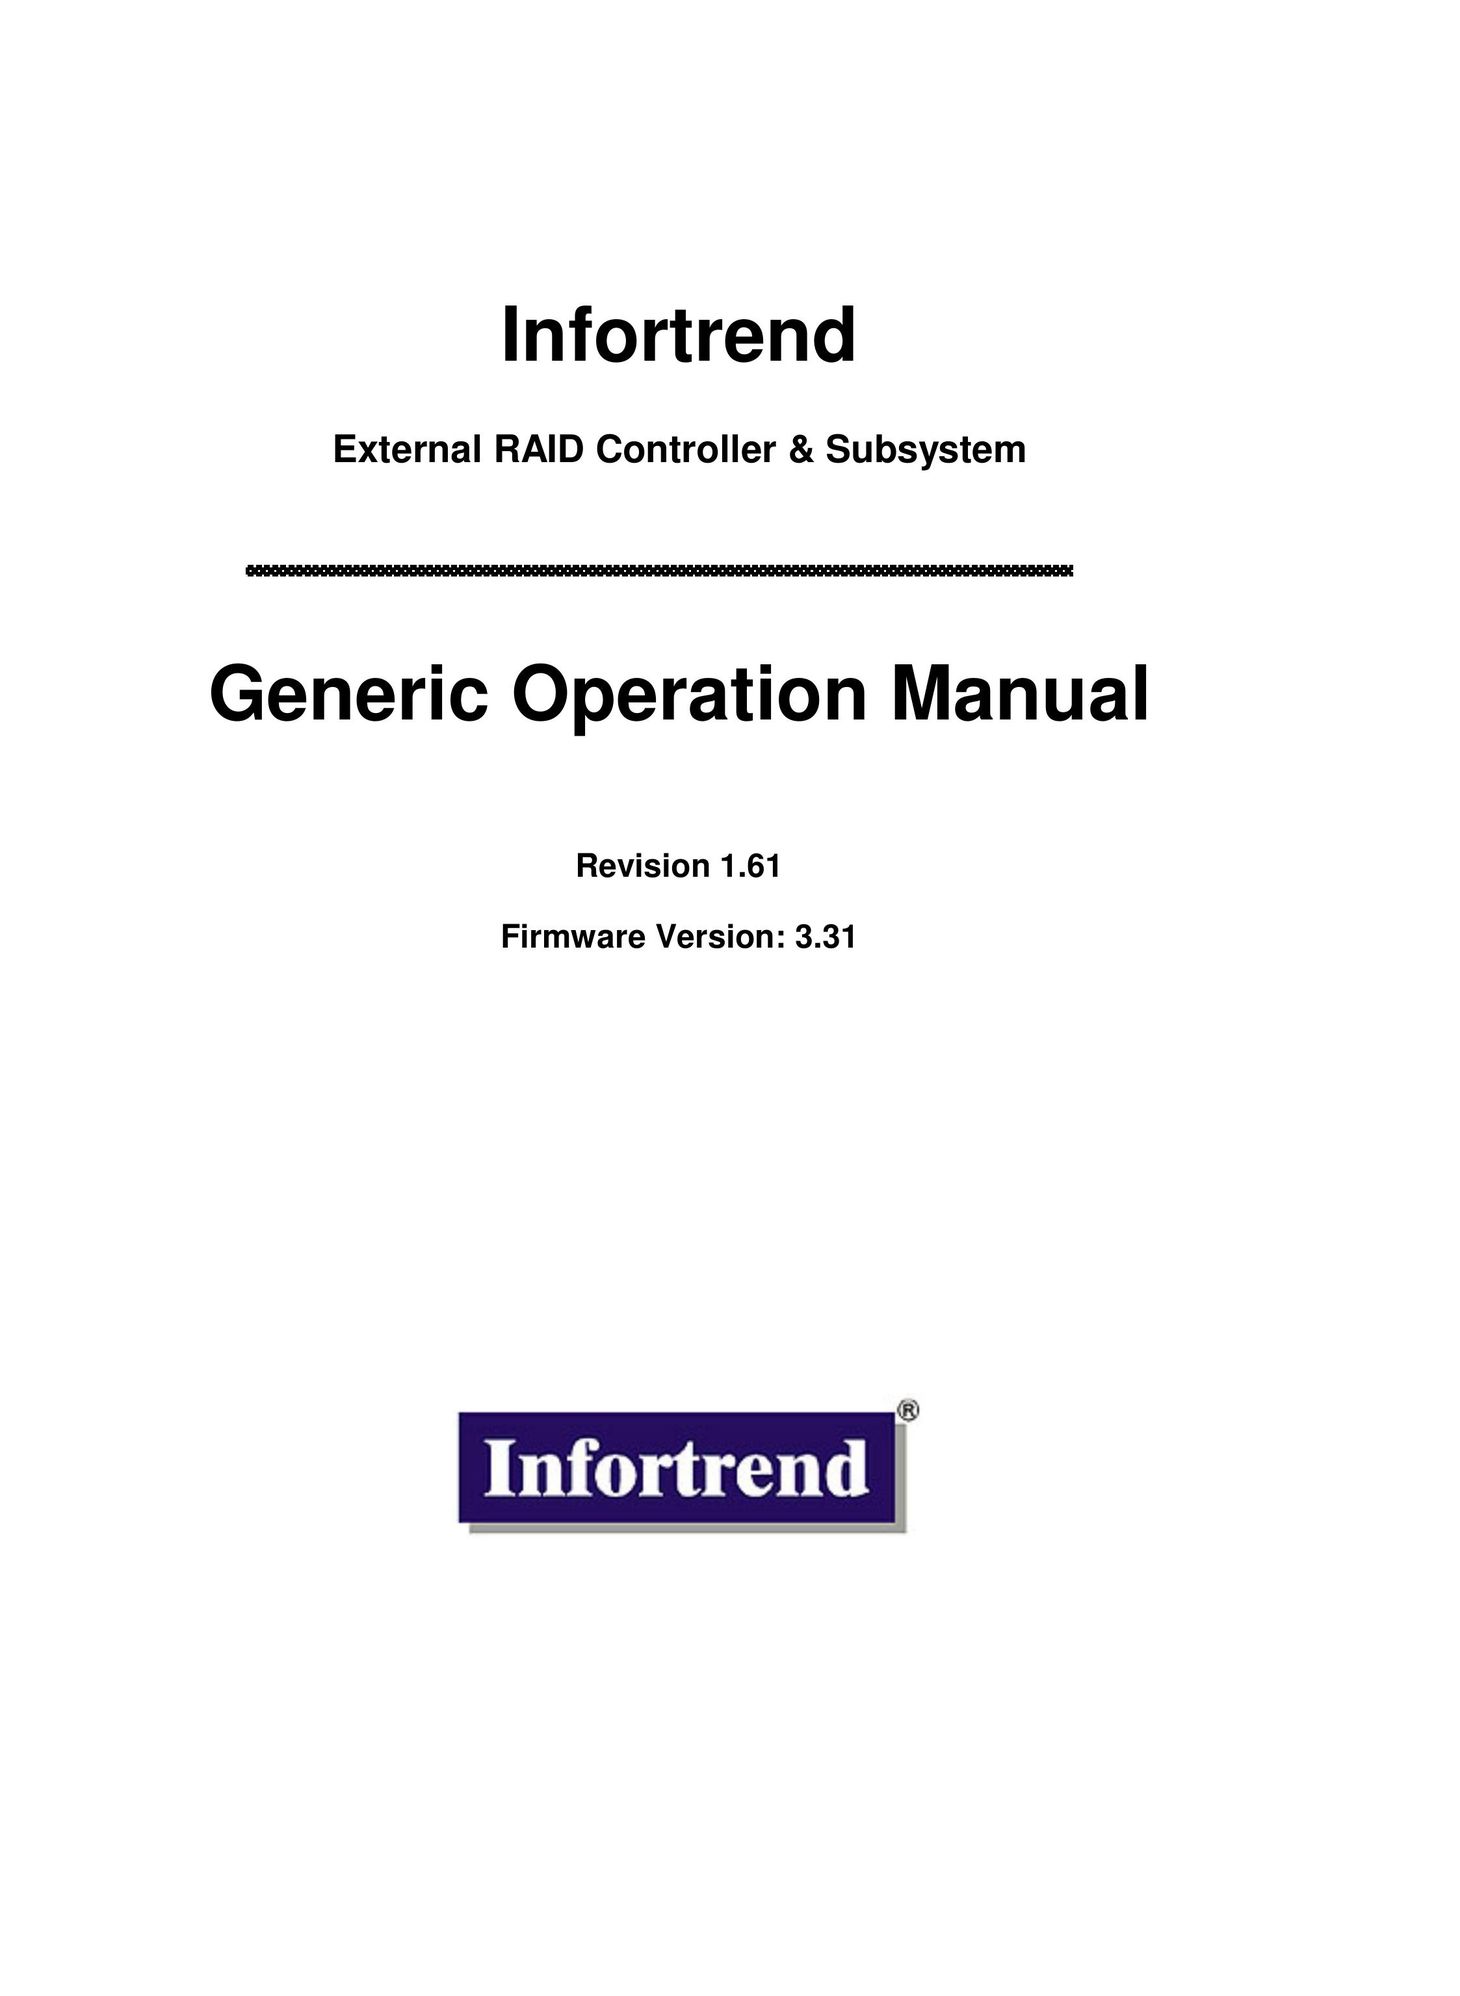 Compaq Infortrend Network Card User Manual